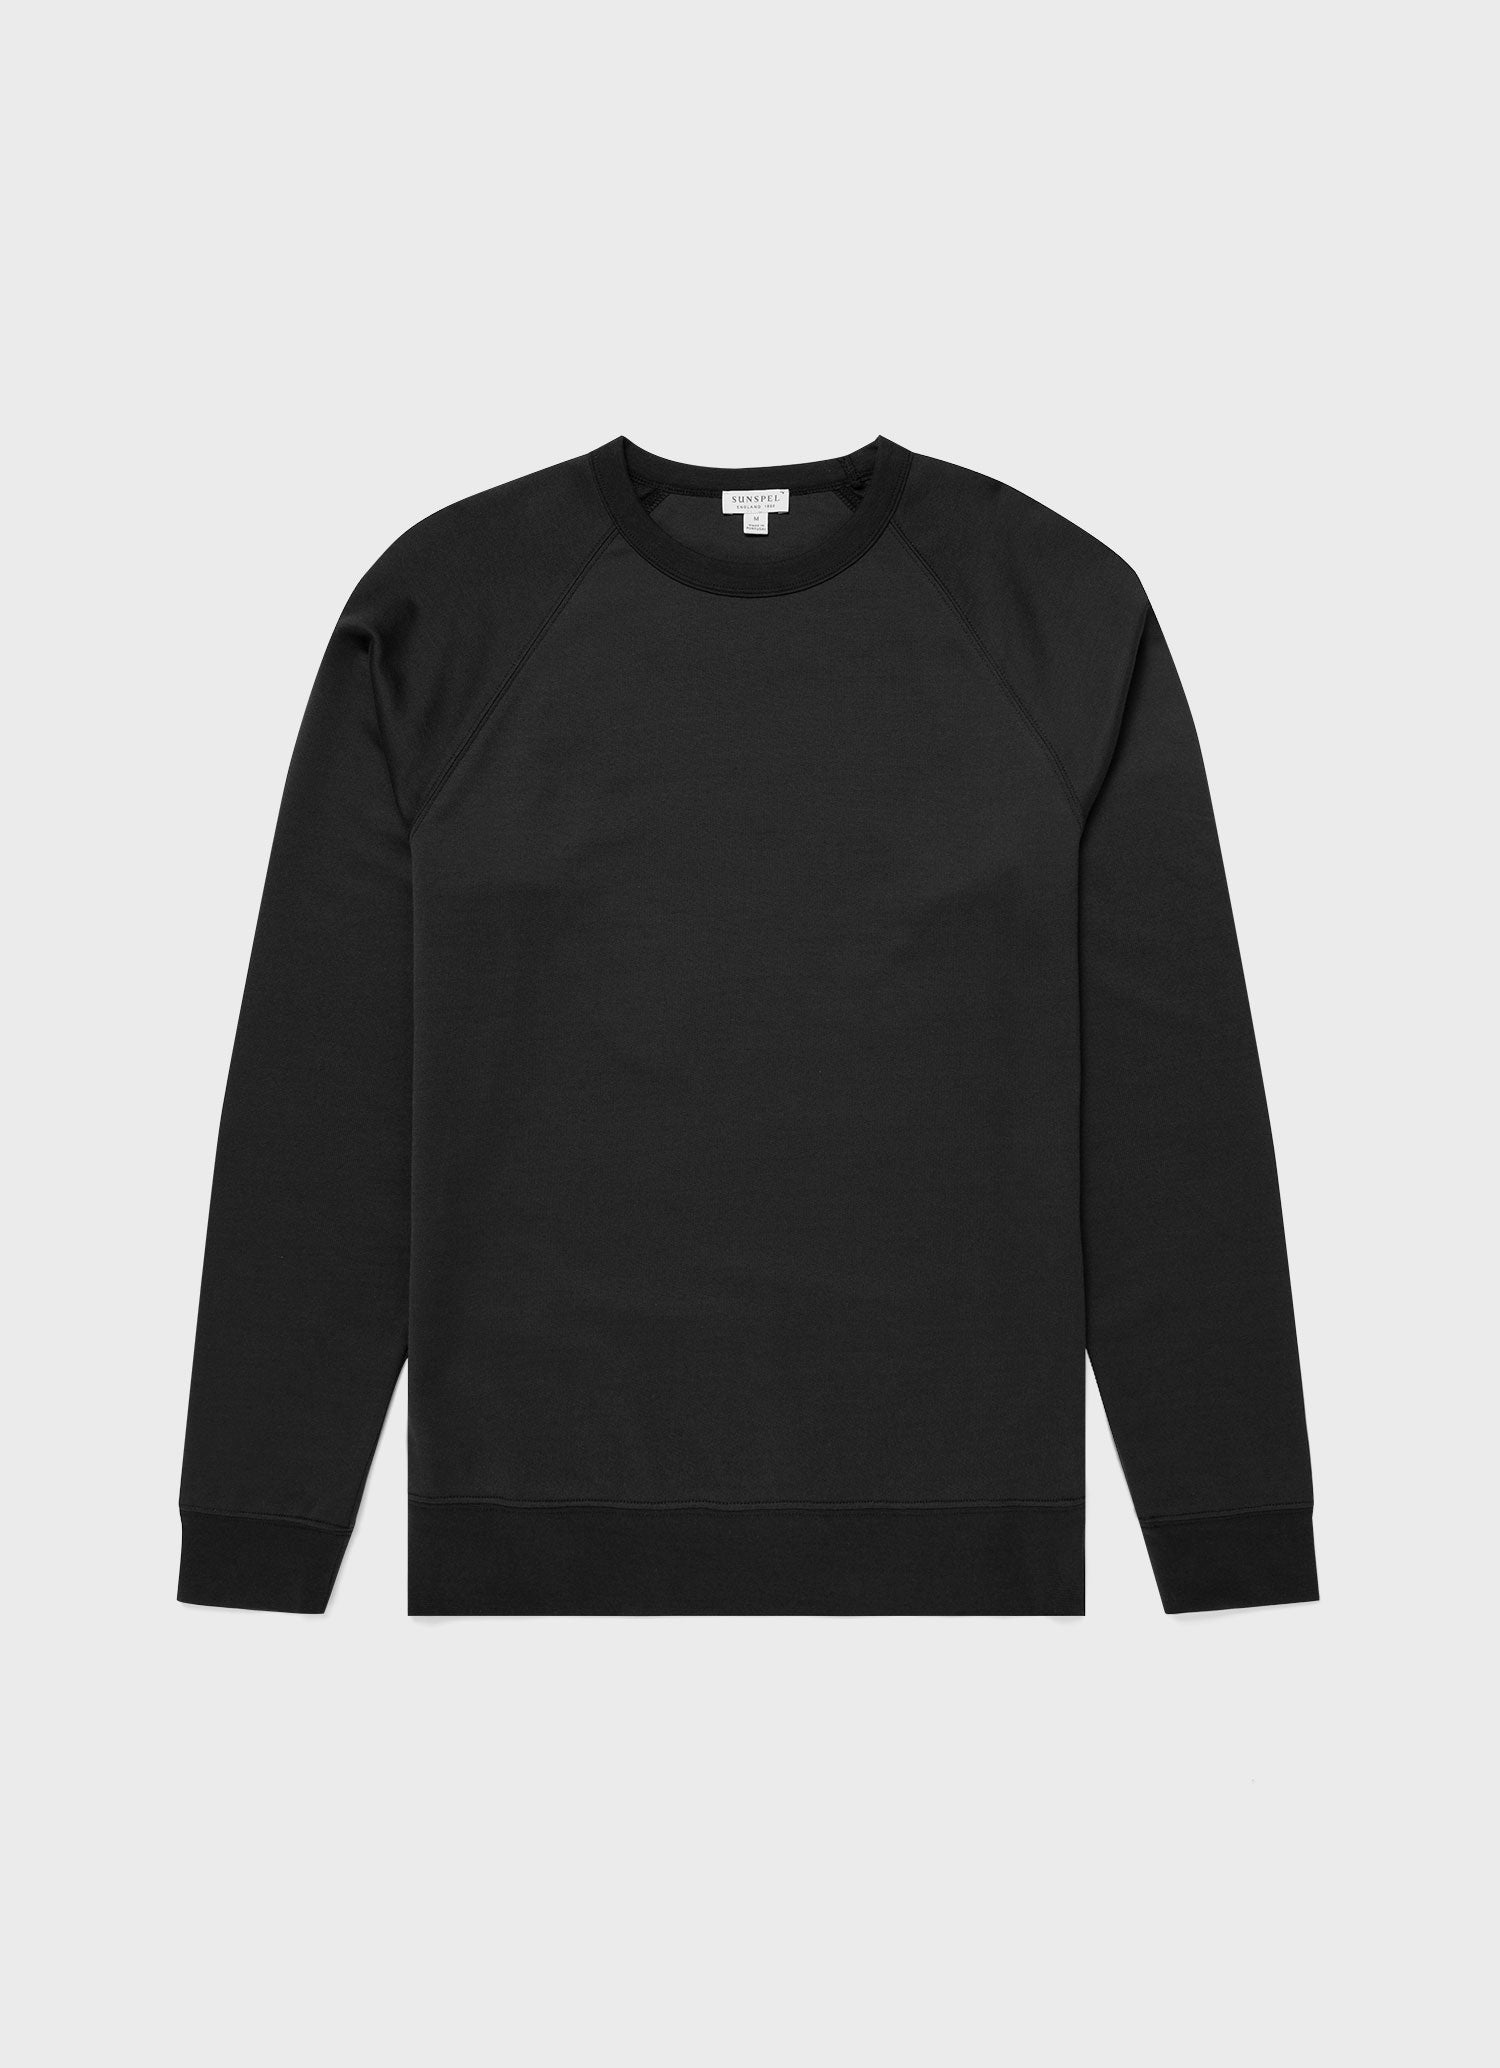 Men's Sea Island Cotton Sweatshirt in Black